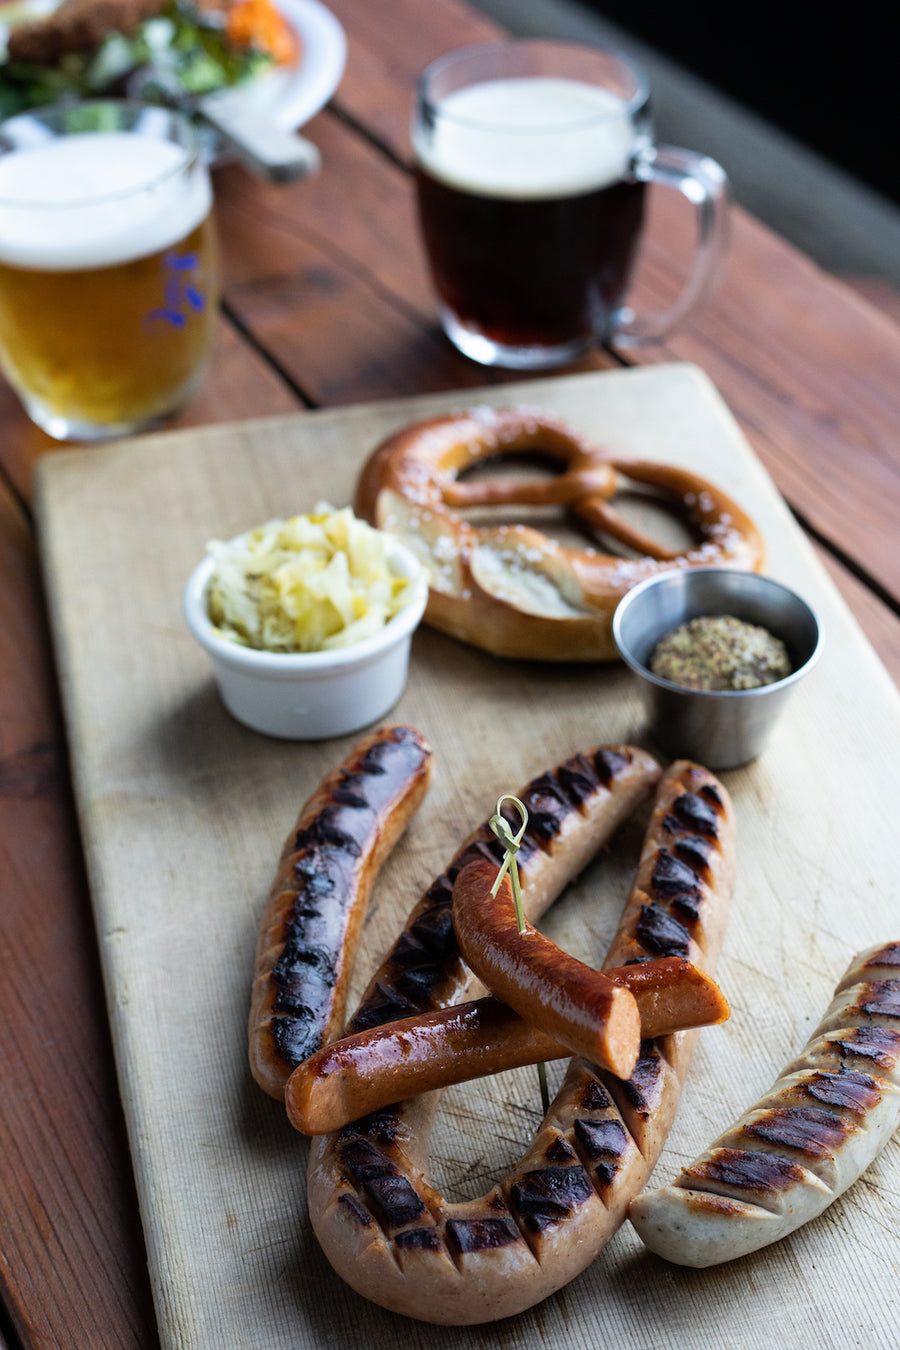 sausages on platter with kraut, mustard, pretzel and beer